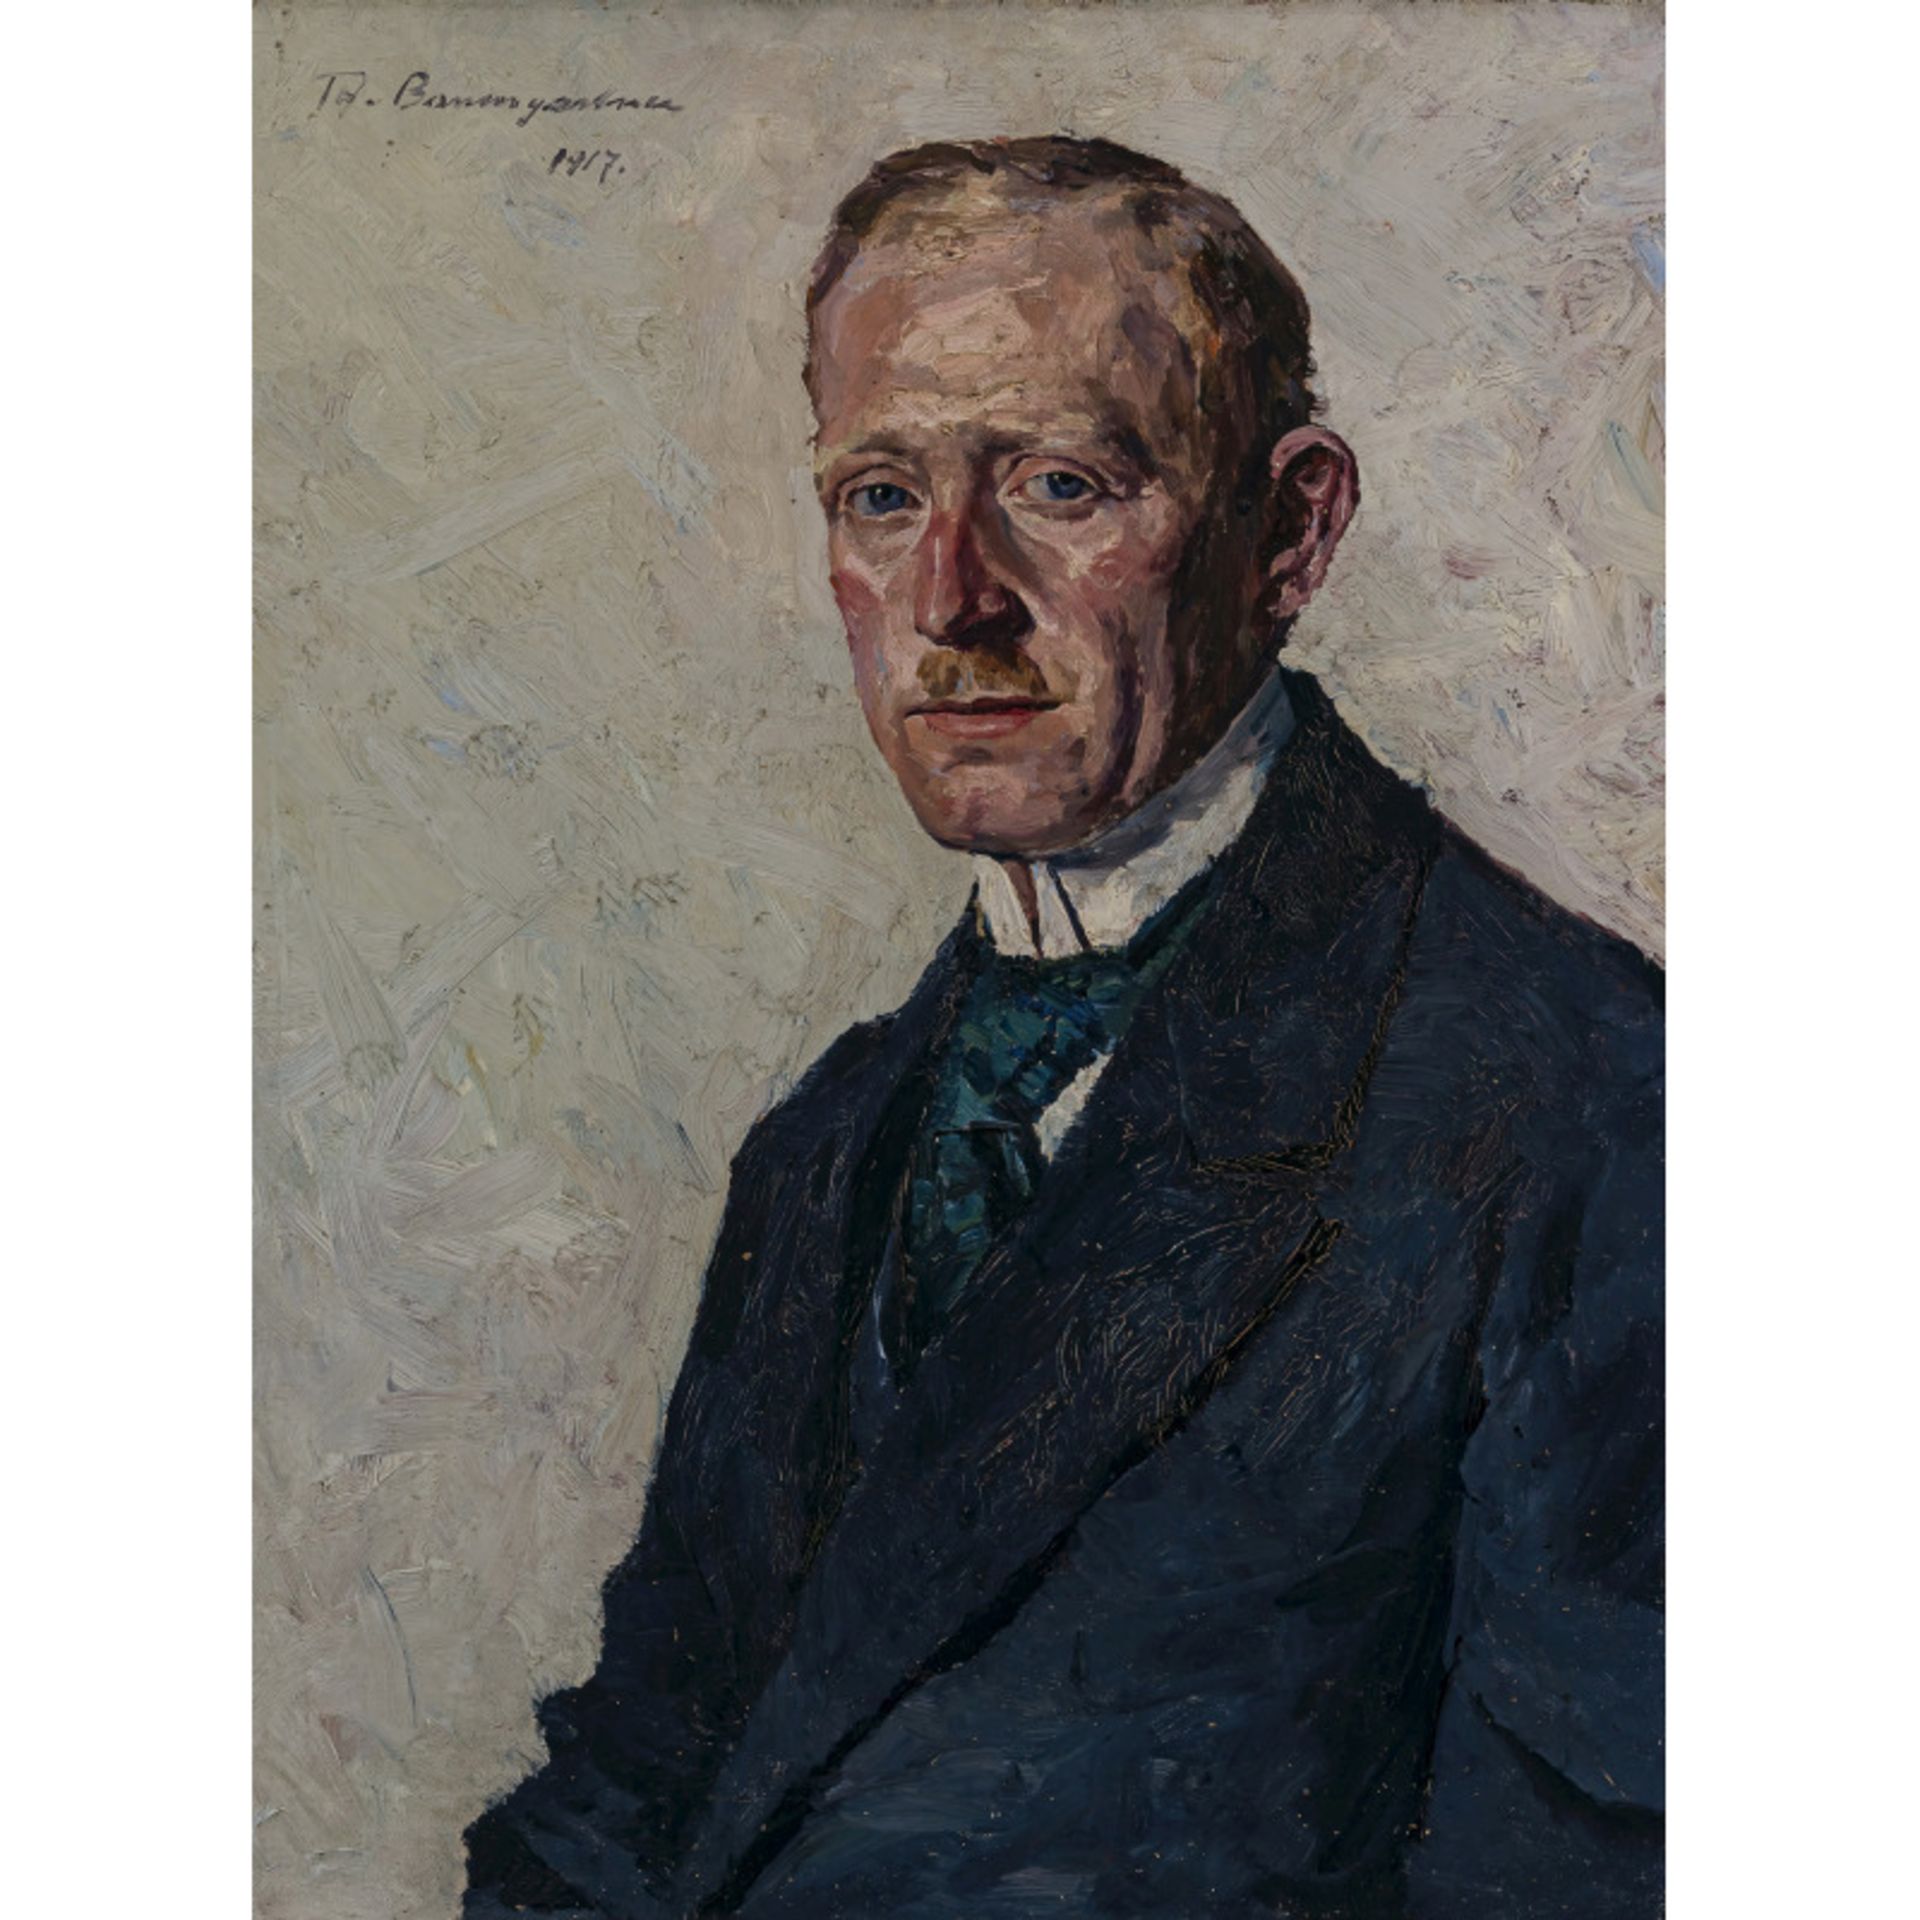 Thomas Baumgartner - Portrait of a man. 1917